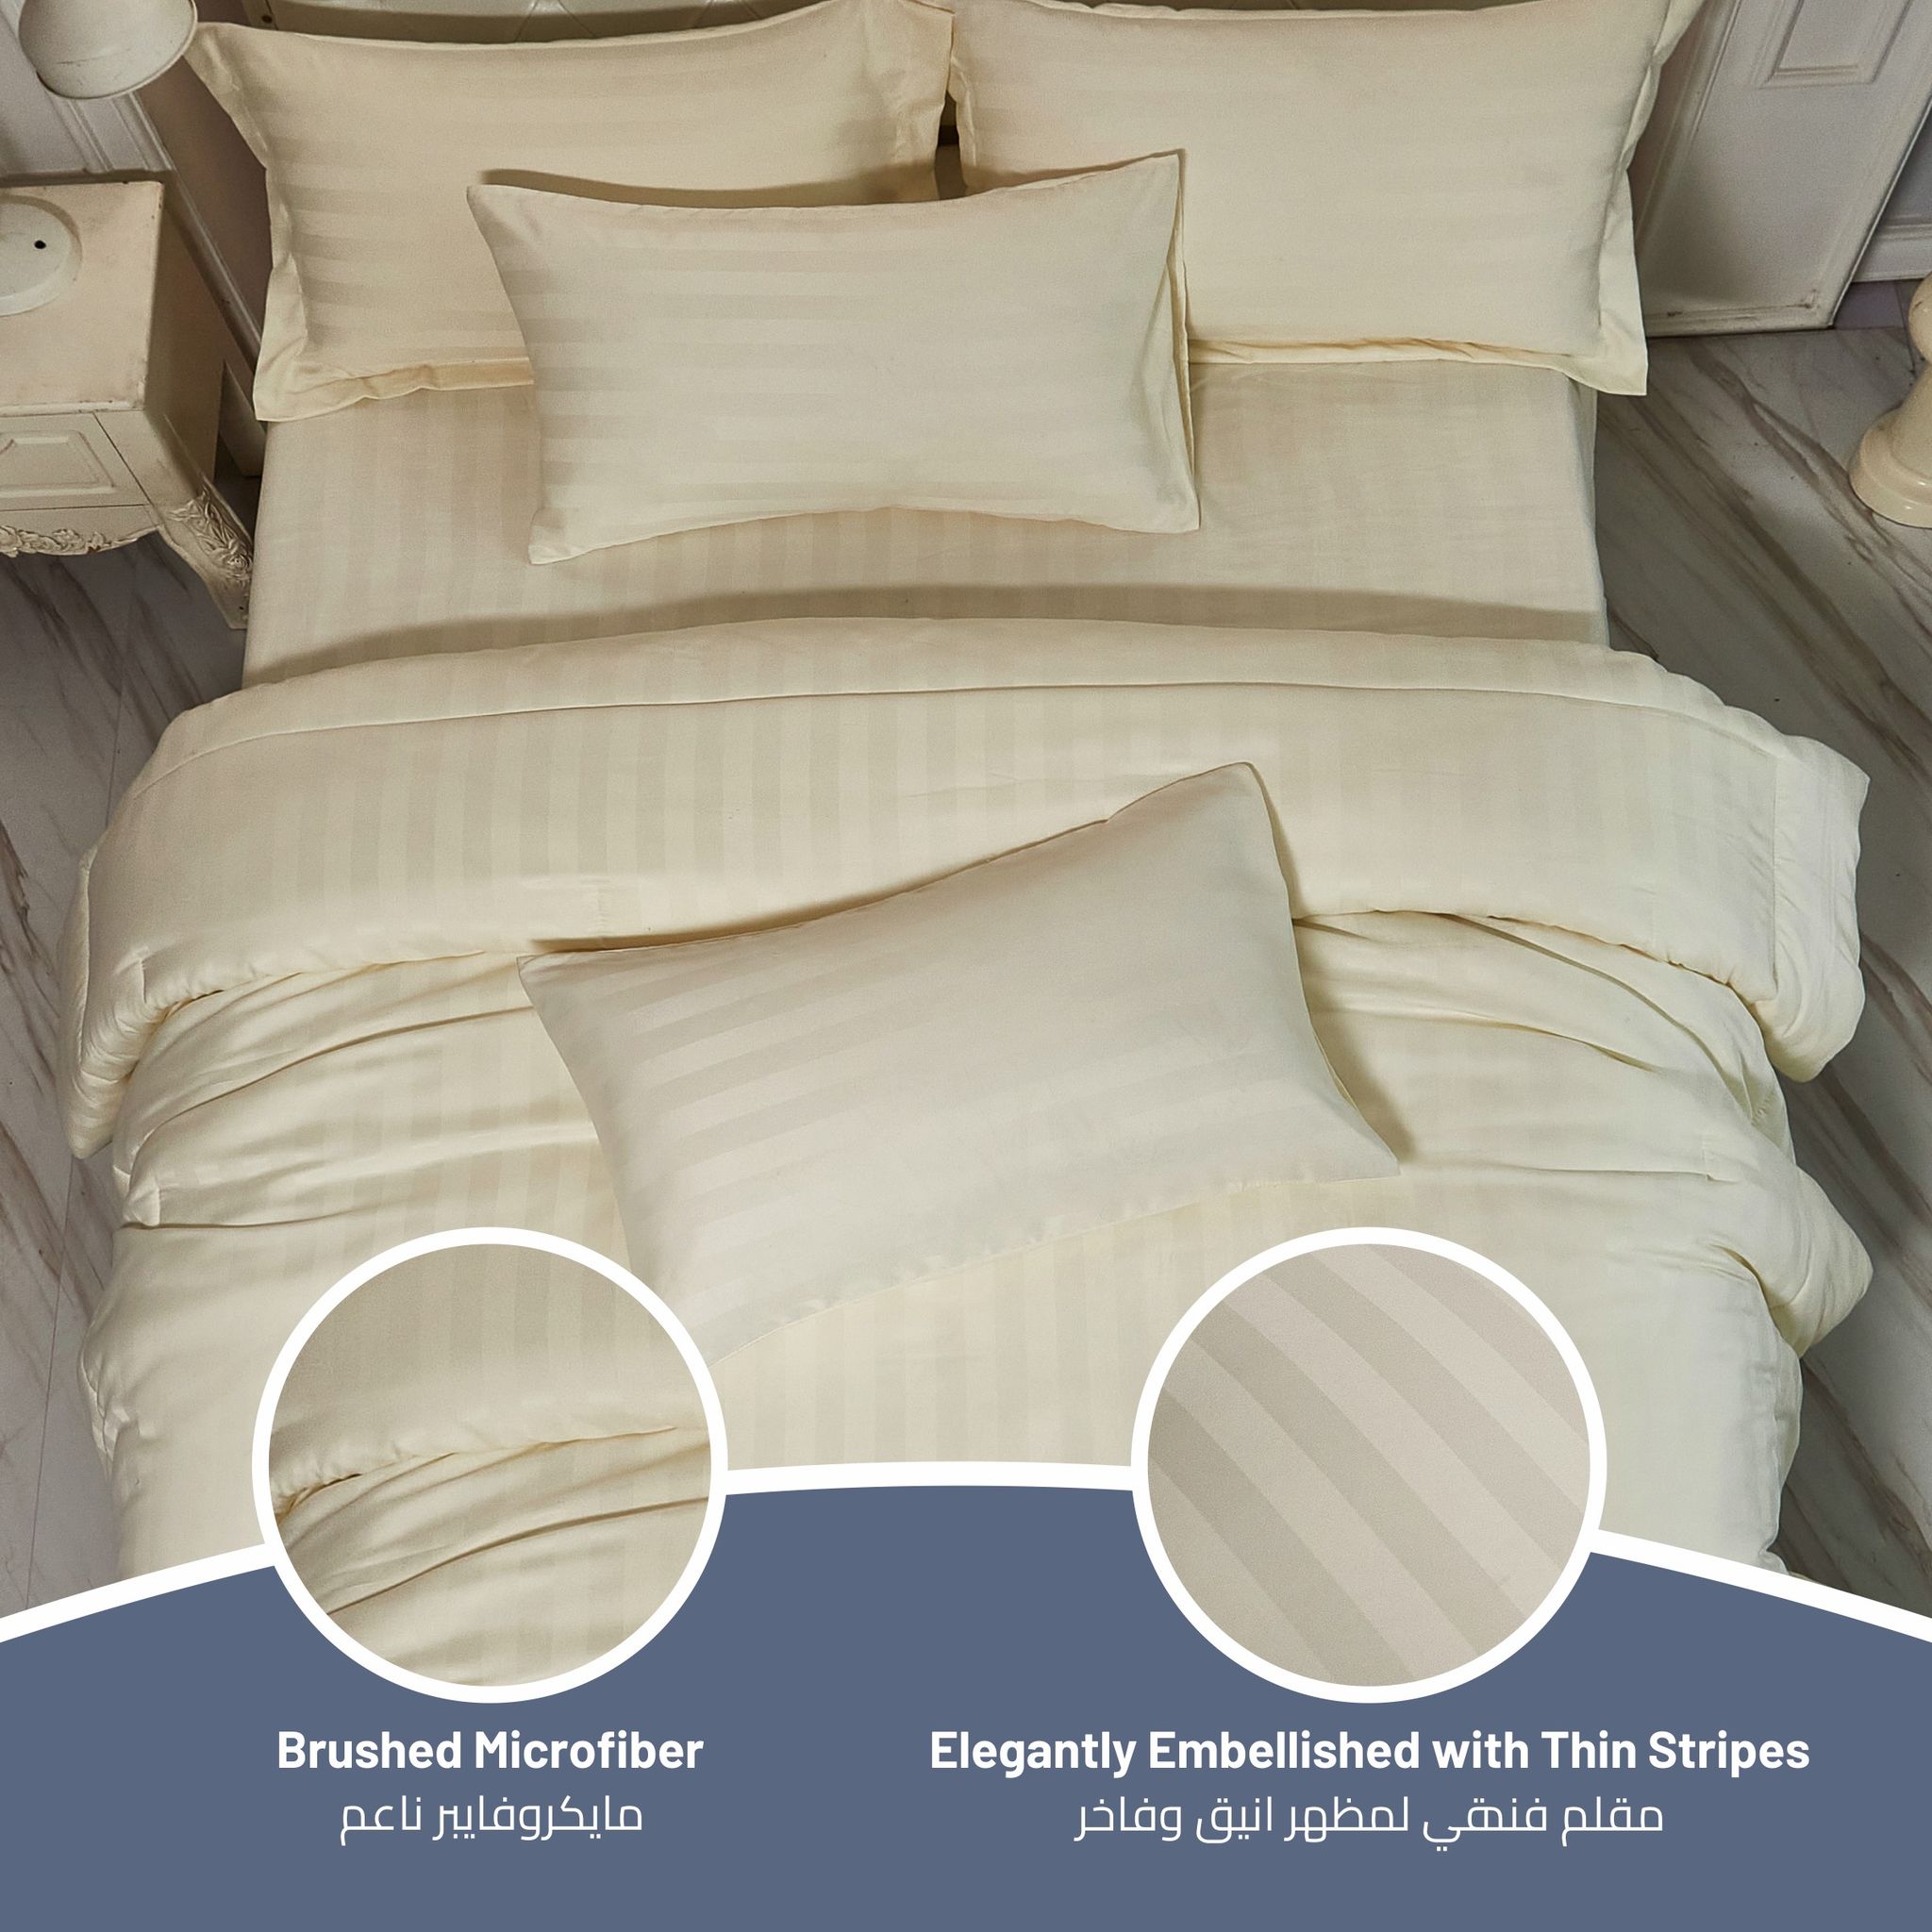 Comforter Set 4-Pcs Single Size Bedding Set Damask Striped Pattern Hotel Style With Down Alternative Microfiber Filling, Cream